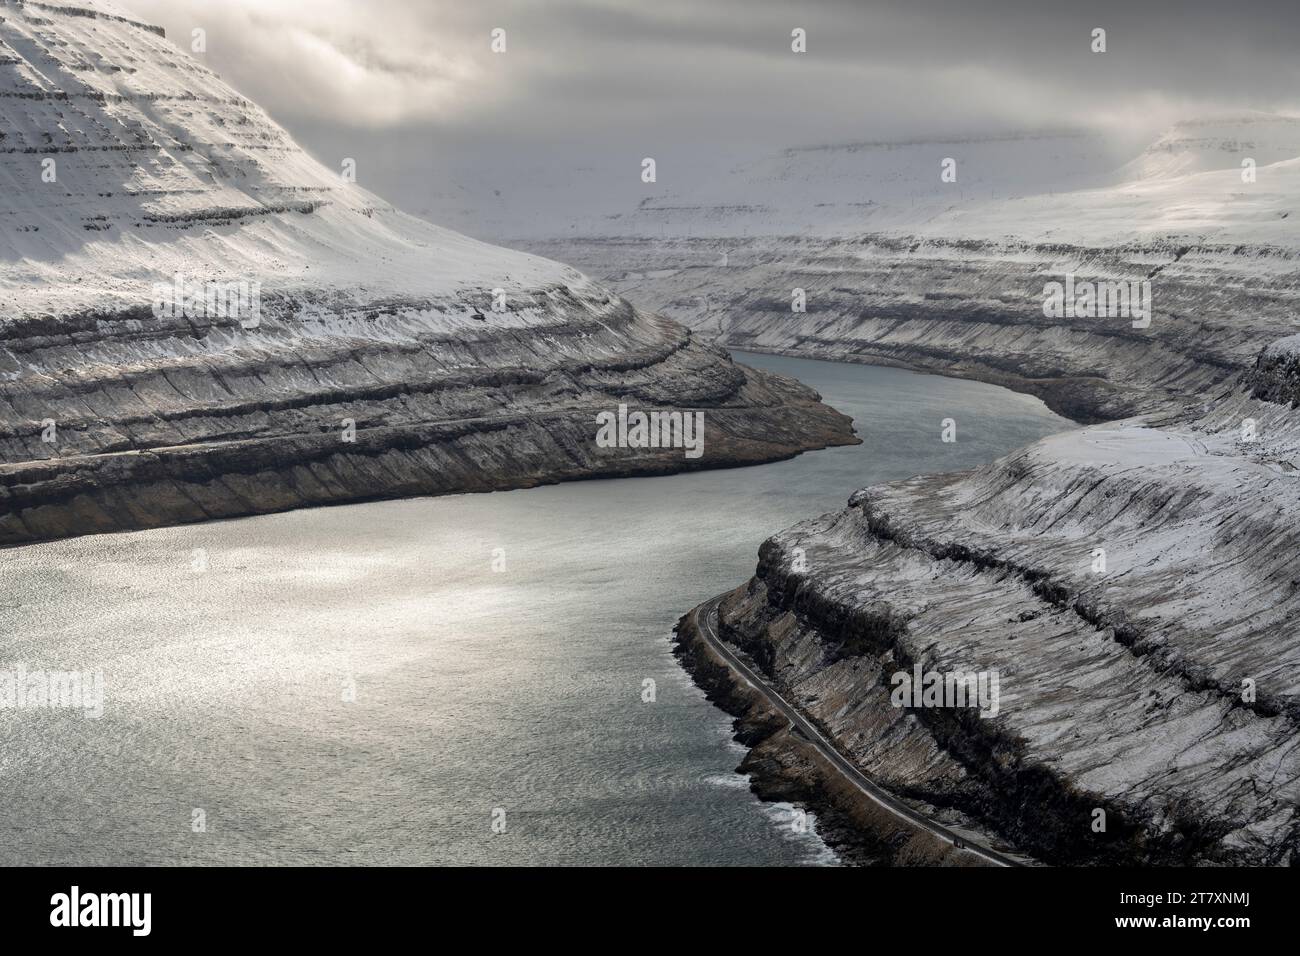 Schneebedeckte Berge am Funningur-Fjord, Eysturoy Island, Färöer Inseln, Dänemark, Europa Stockfoto